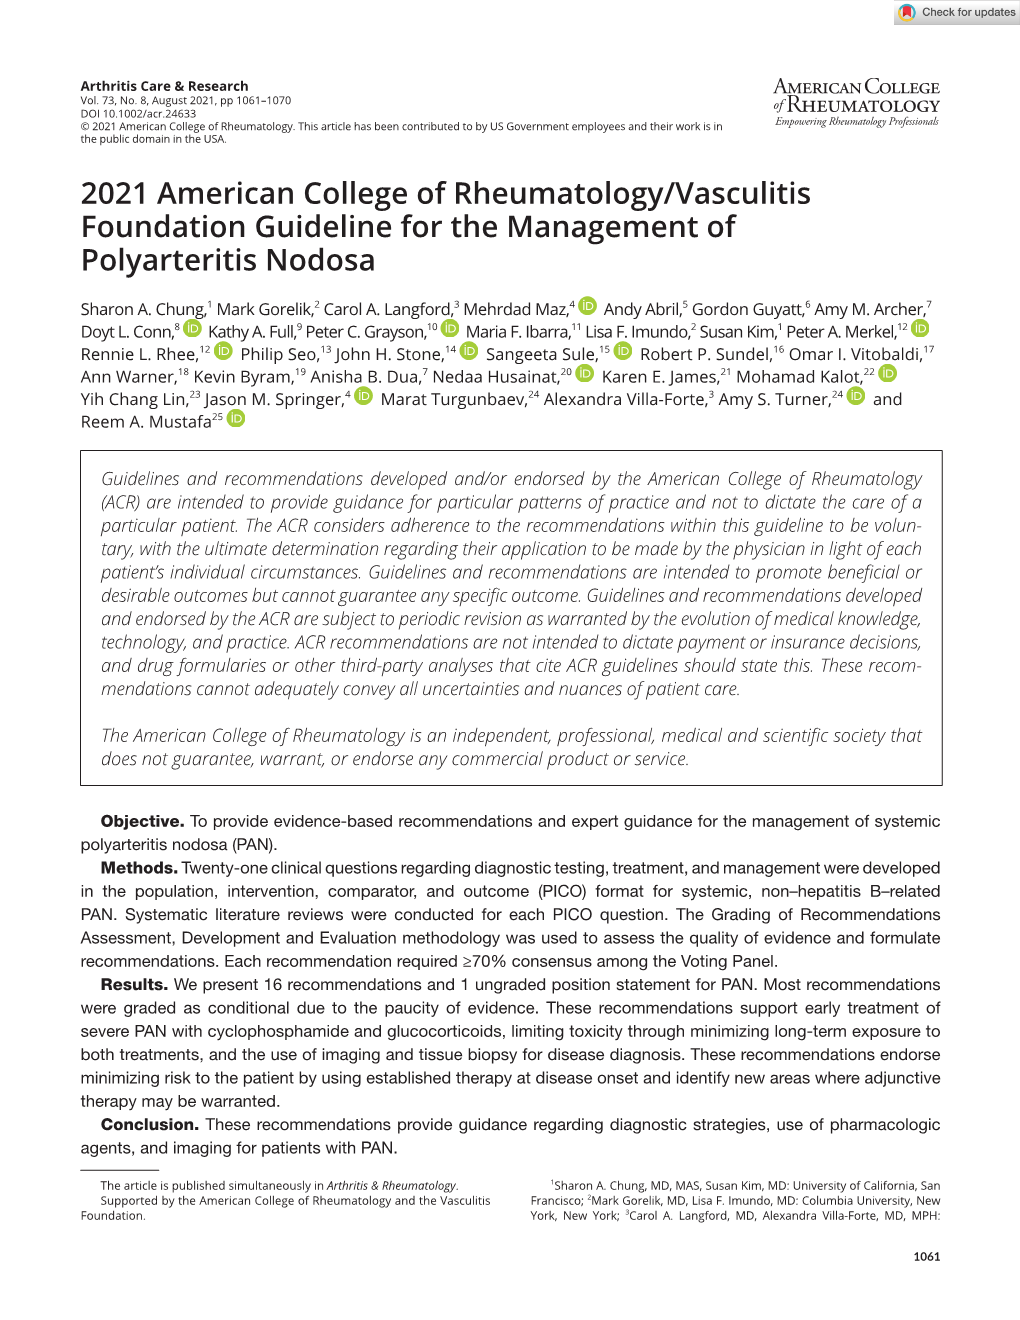 2021 American College of Rheumatology/Vasculitis Foundation Guideline for the Management of Polyarteritis Nodosa